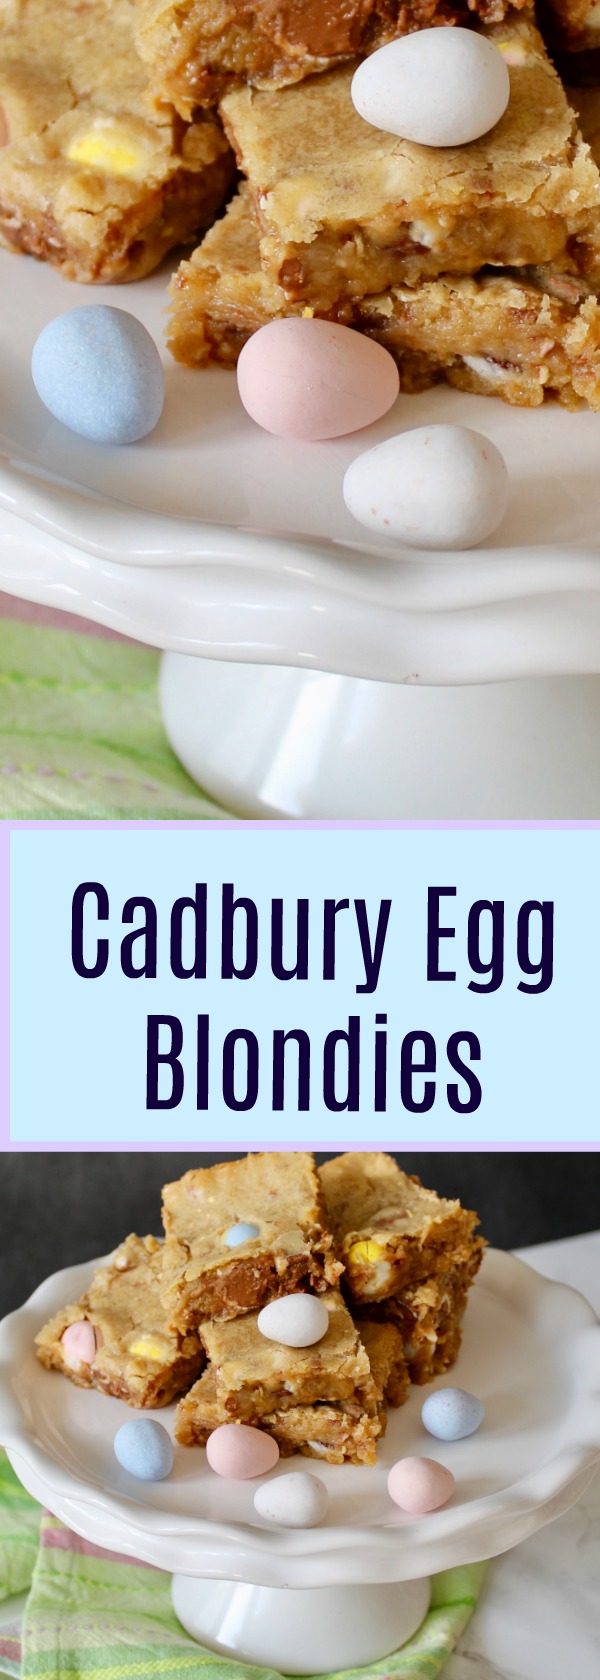 Cadbury Egg Blondies